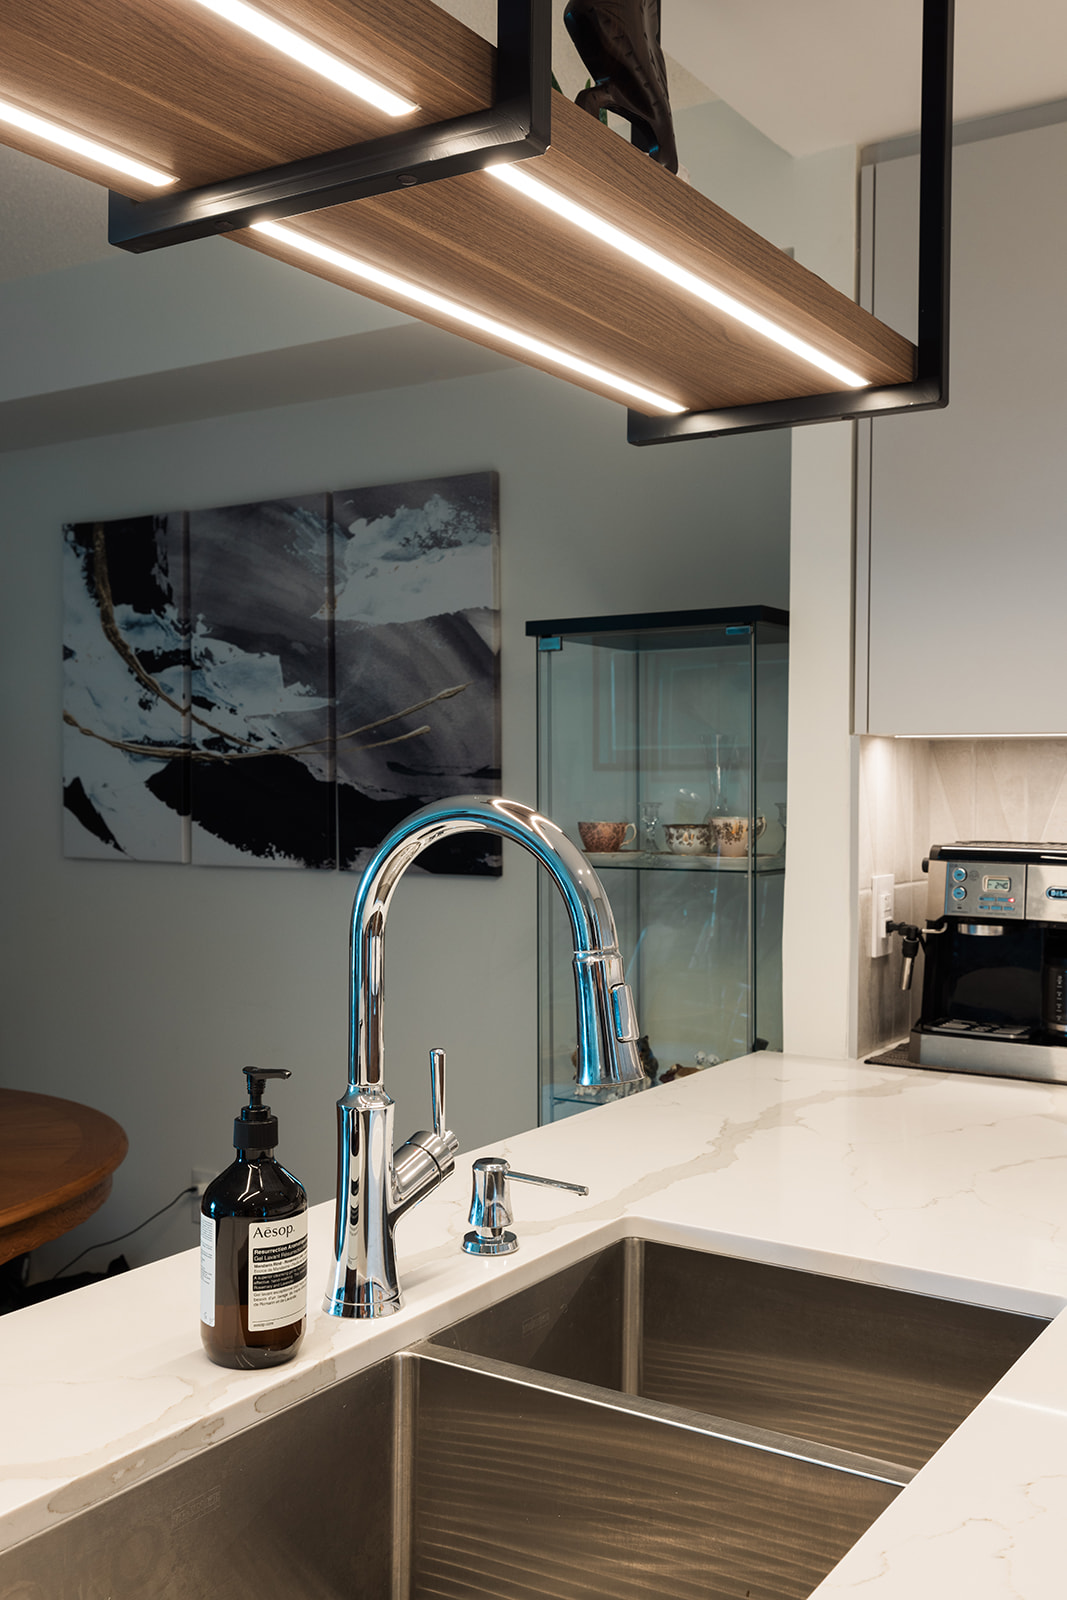 Hanging light fixture above sink in GTA condo kitchen renovation